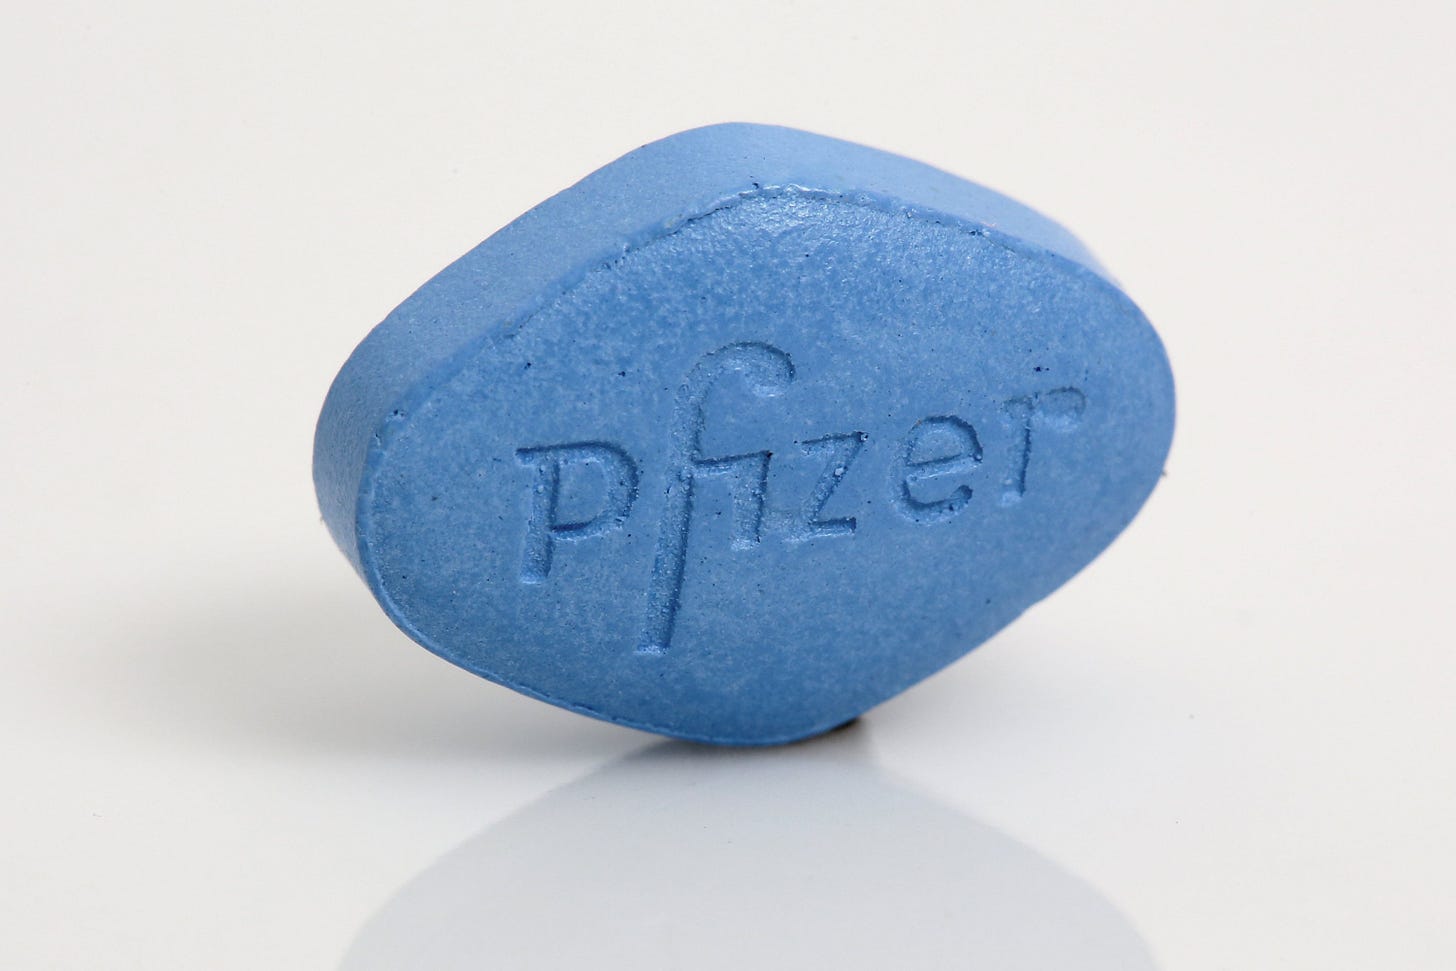 Second time's the charm? Pfizer tries again with OTC Viagra in the U.K. |  Fierce Pharma